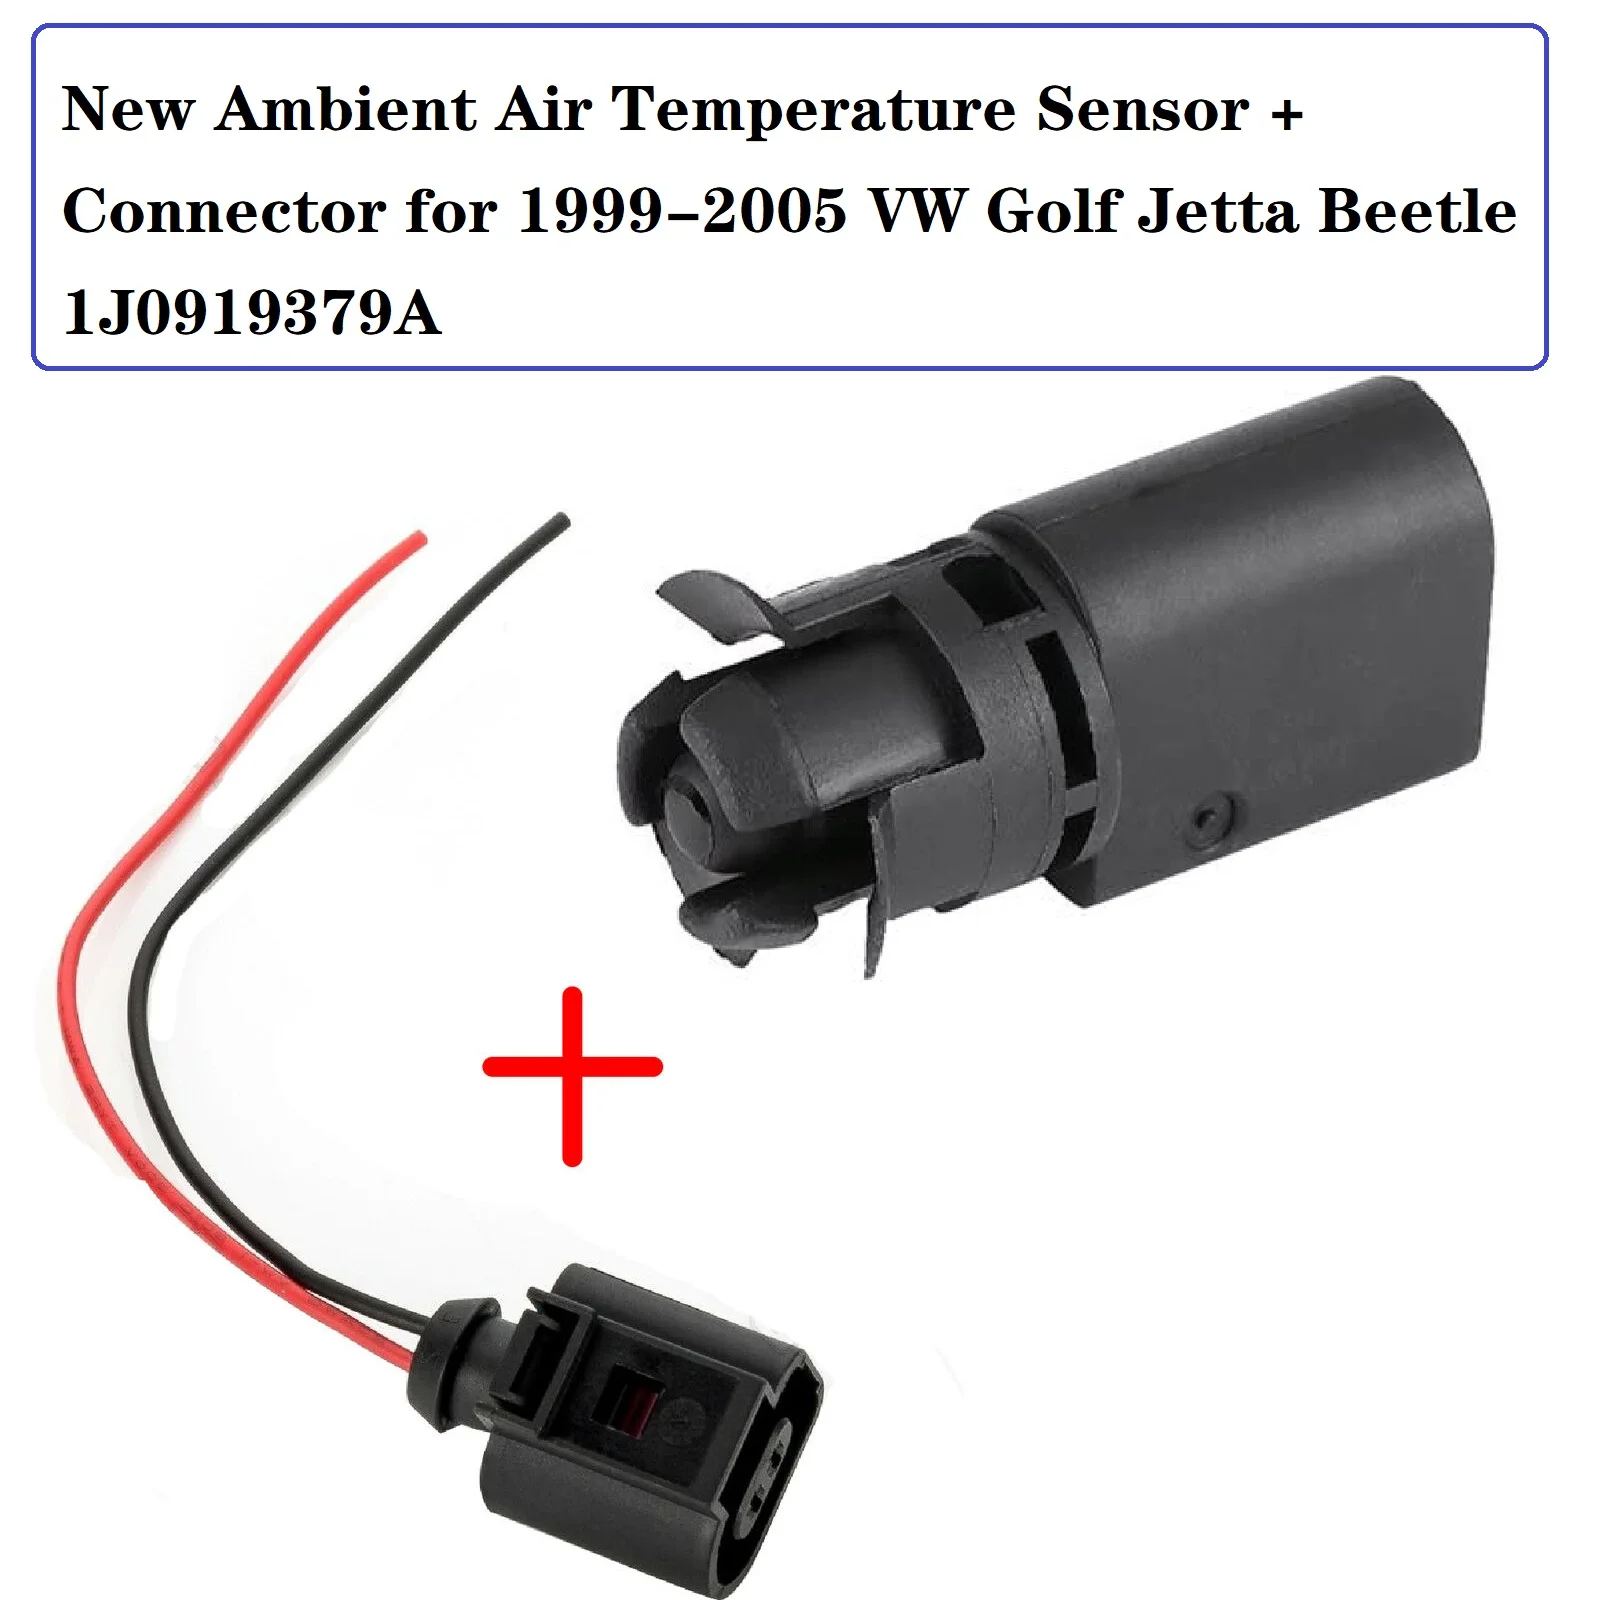 

1J0919379 New Ambient Air Temperature Sensor Connector For 1999-2005 VW Golf Jetta Beetle 1J0919379A / 1J0919379 / 1J0 919 379A